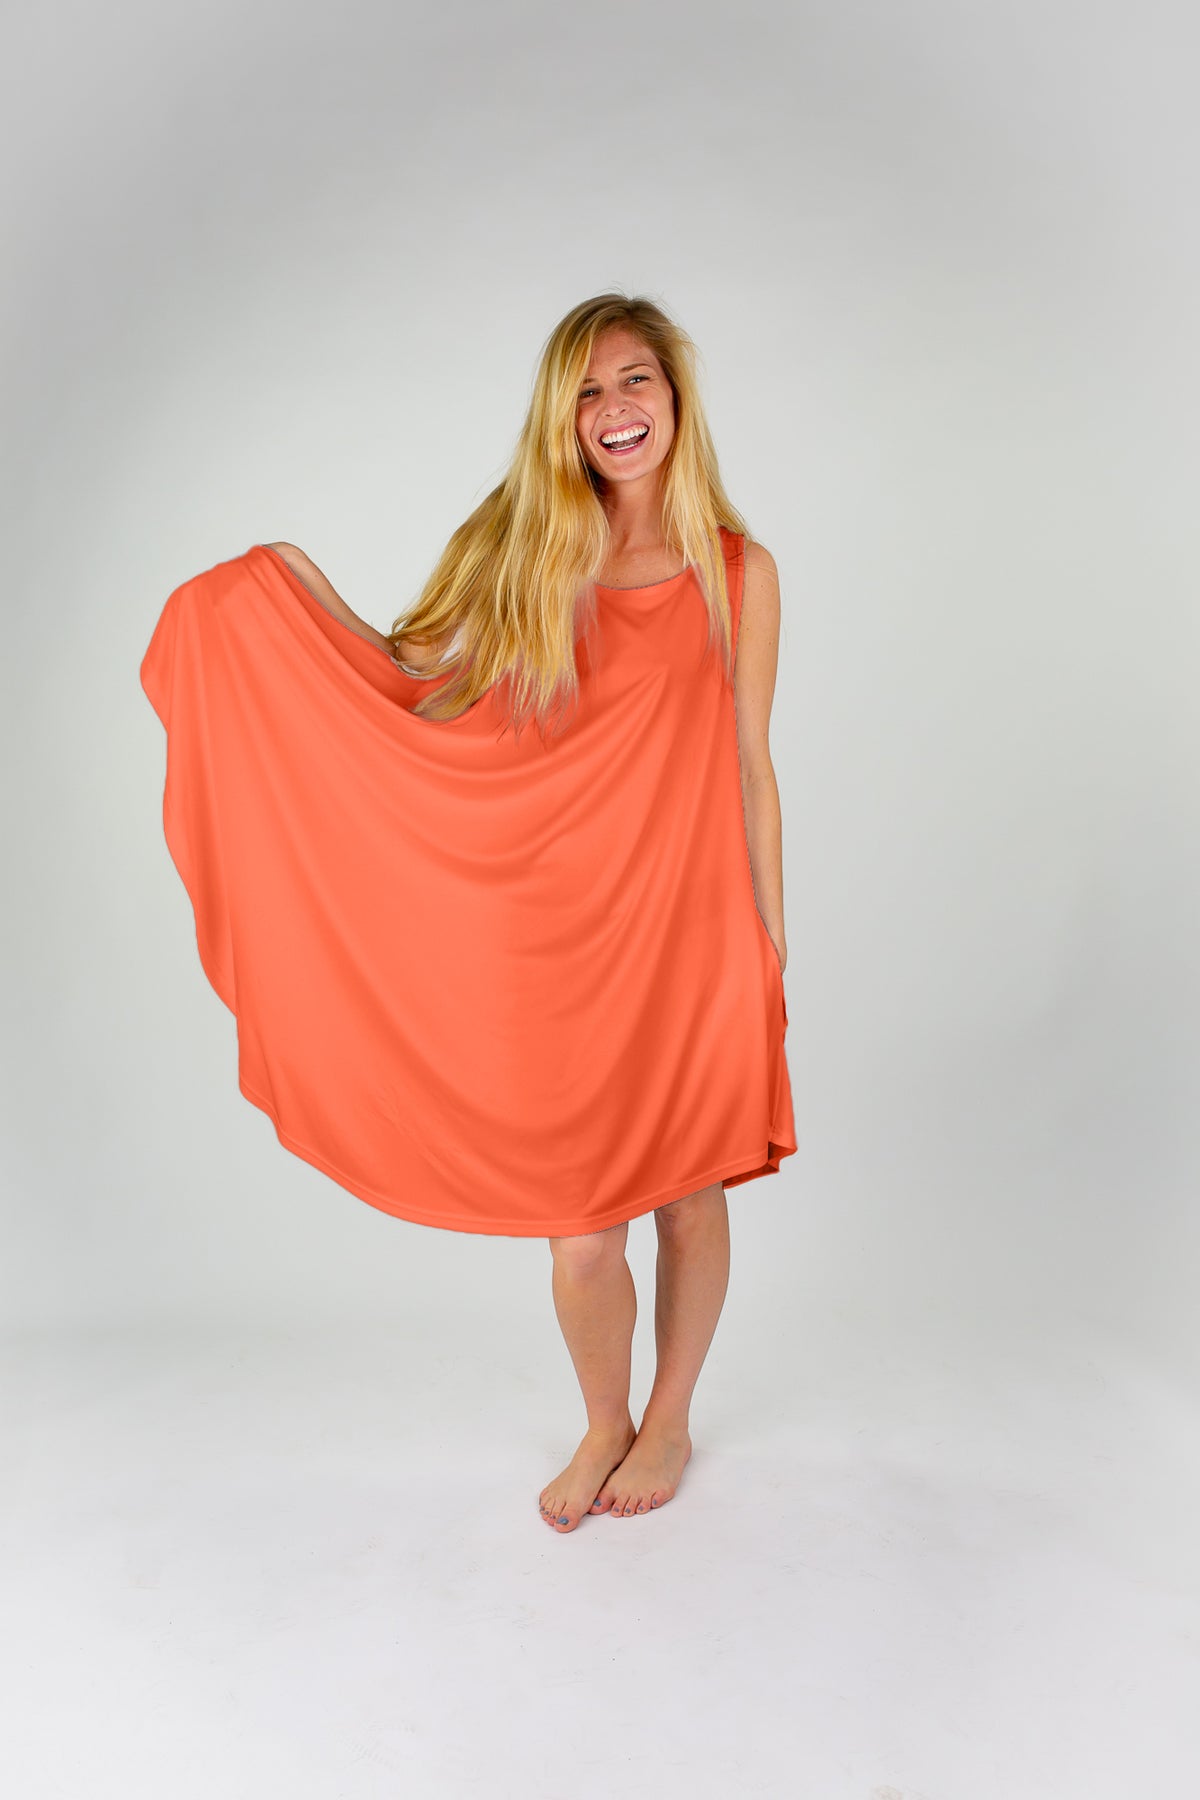 Summer Sunset Orange - Decked Out Dress